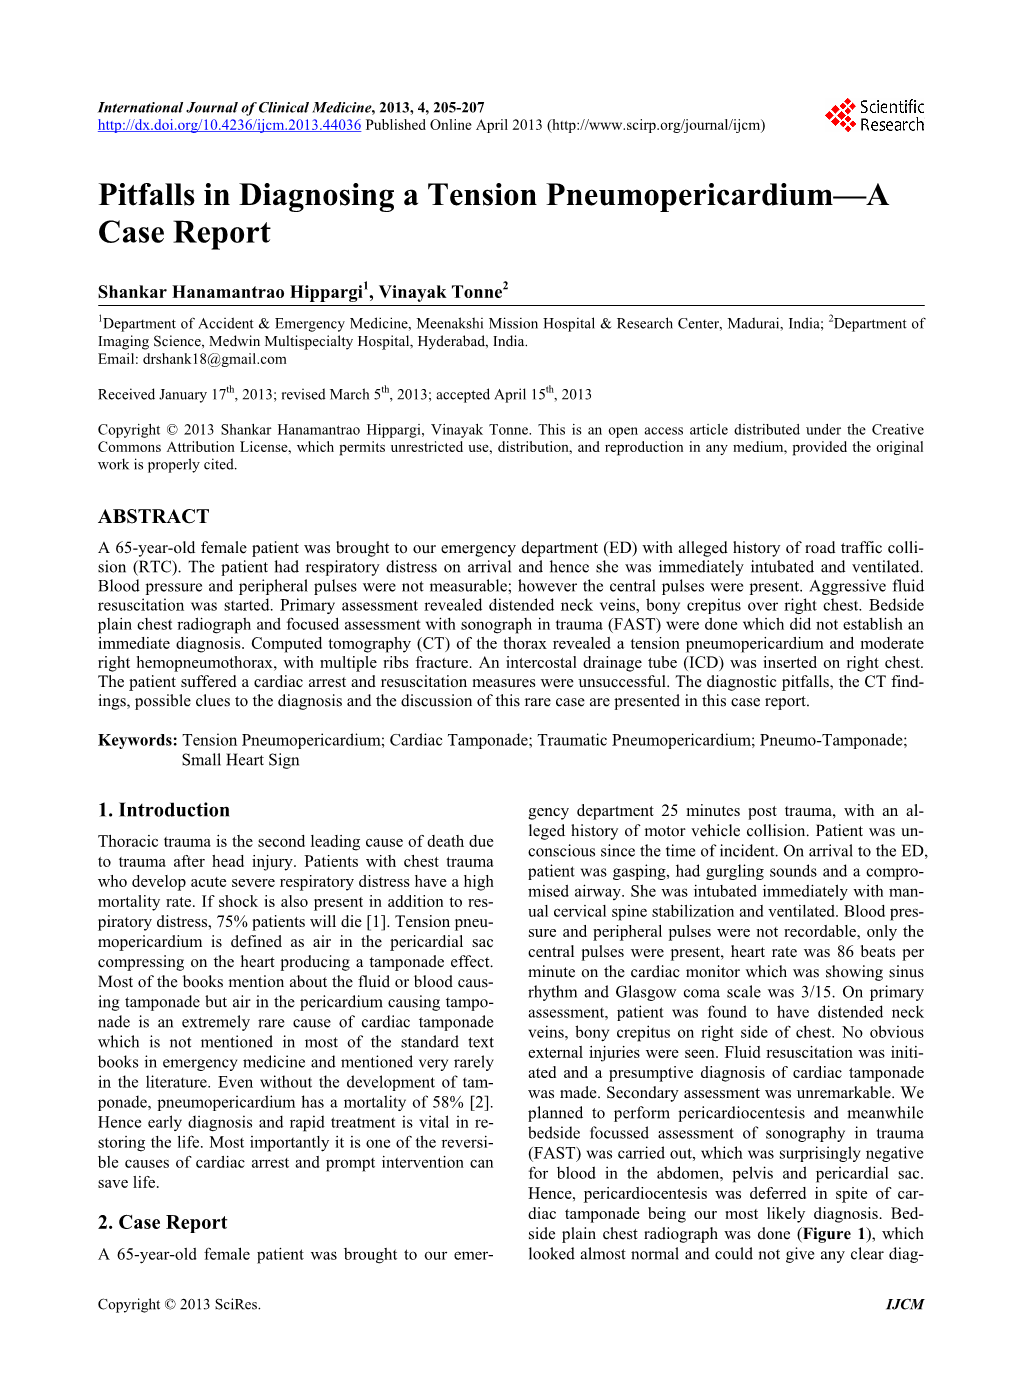 Pitfalls in Diagnosing a Tension Pneumopericardium—A Case Report